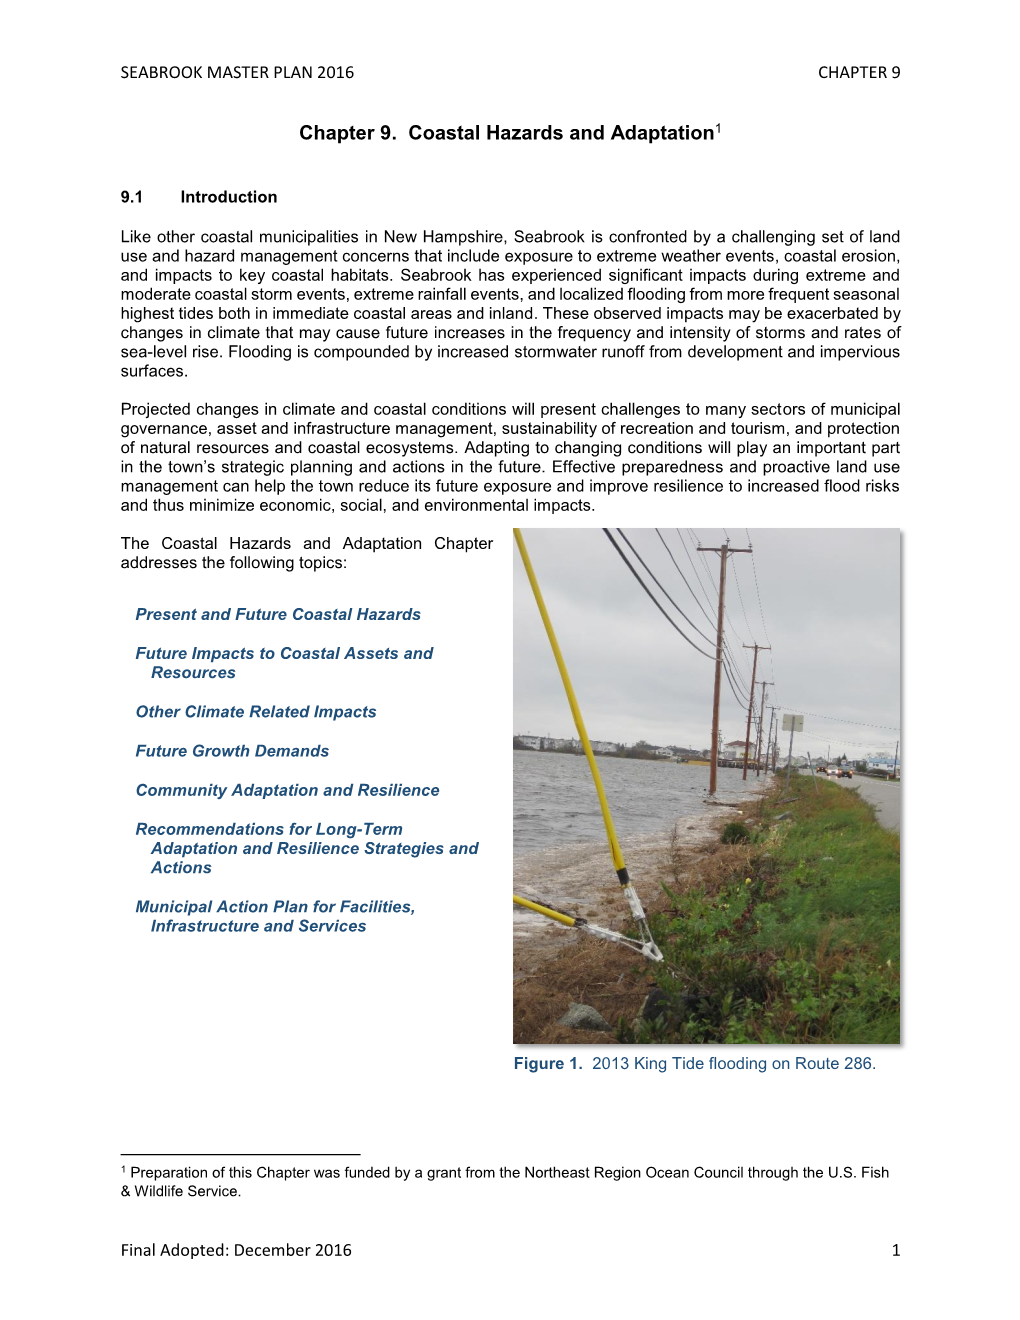 Chapter 9. Coastal Hazards and Adaptation1